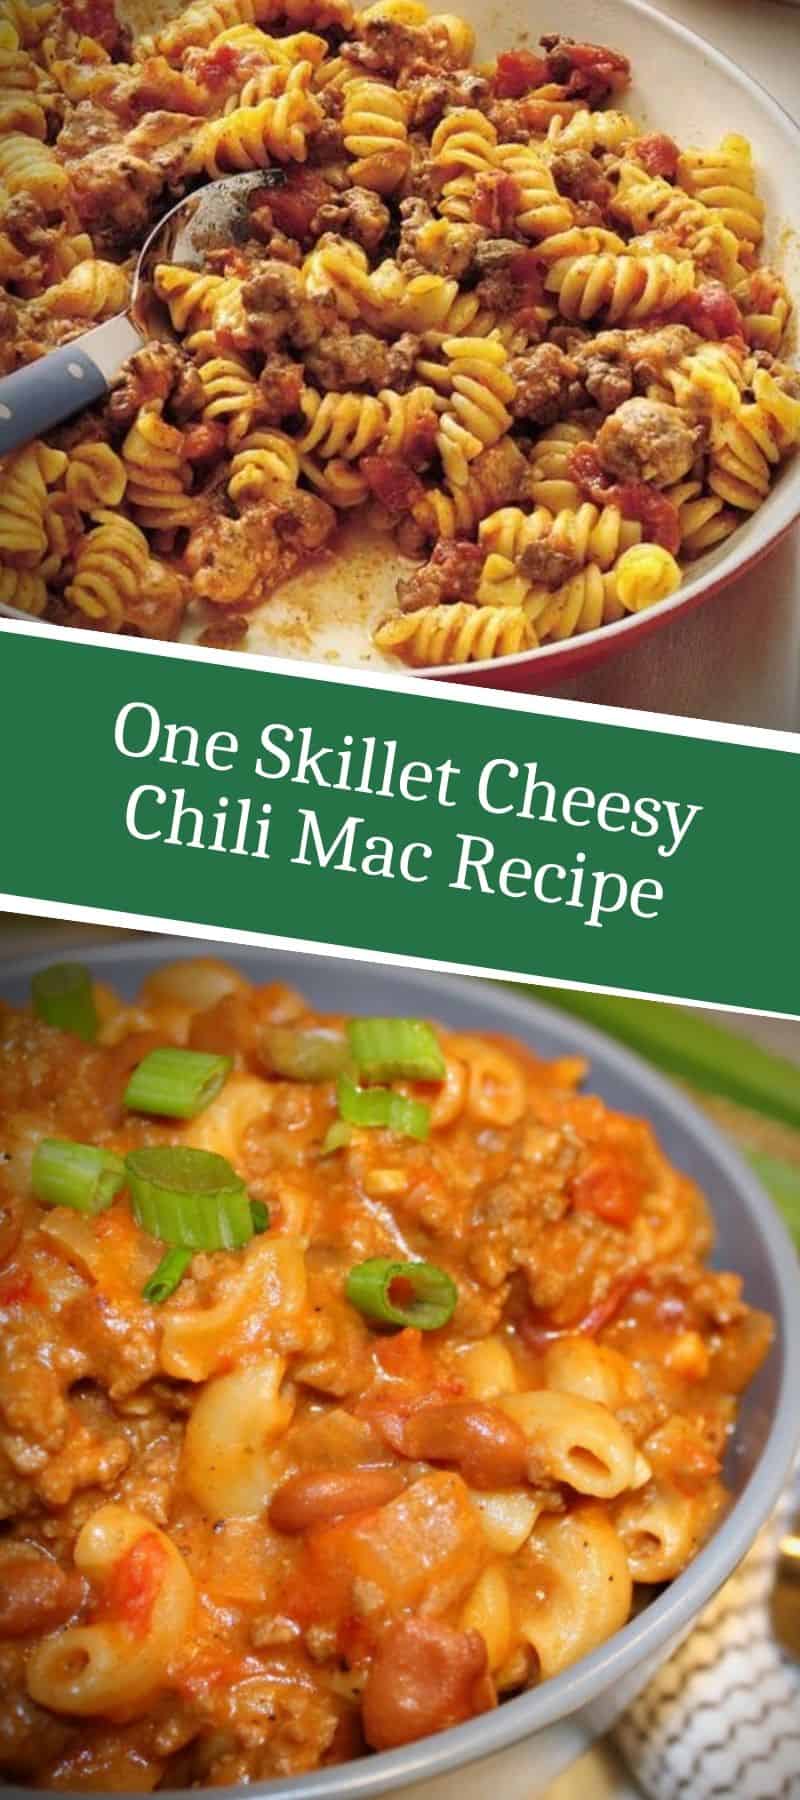 One Skillet Cheesy Chili Mac Recipe 3